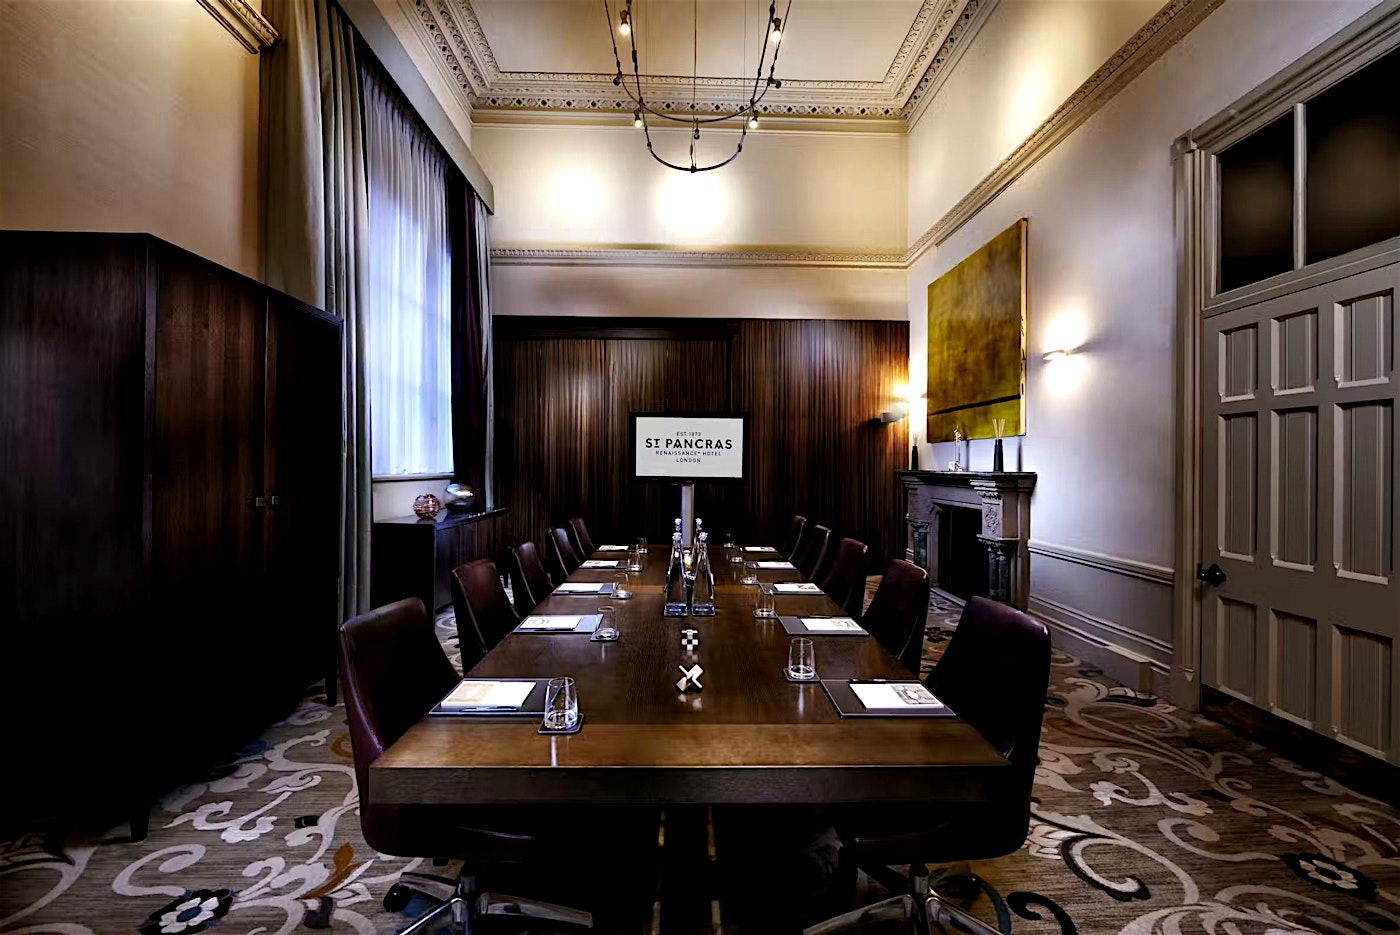 A boardroom style meeting room in London's Kings Cross neighbourhood